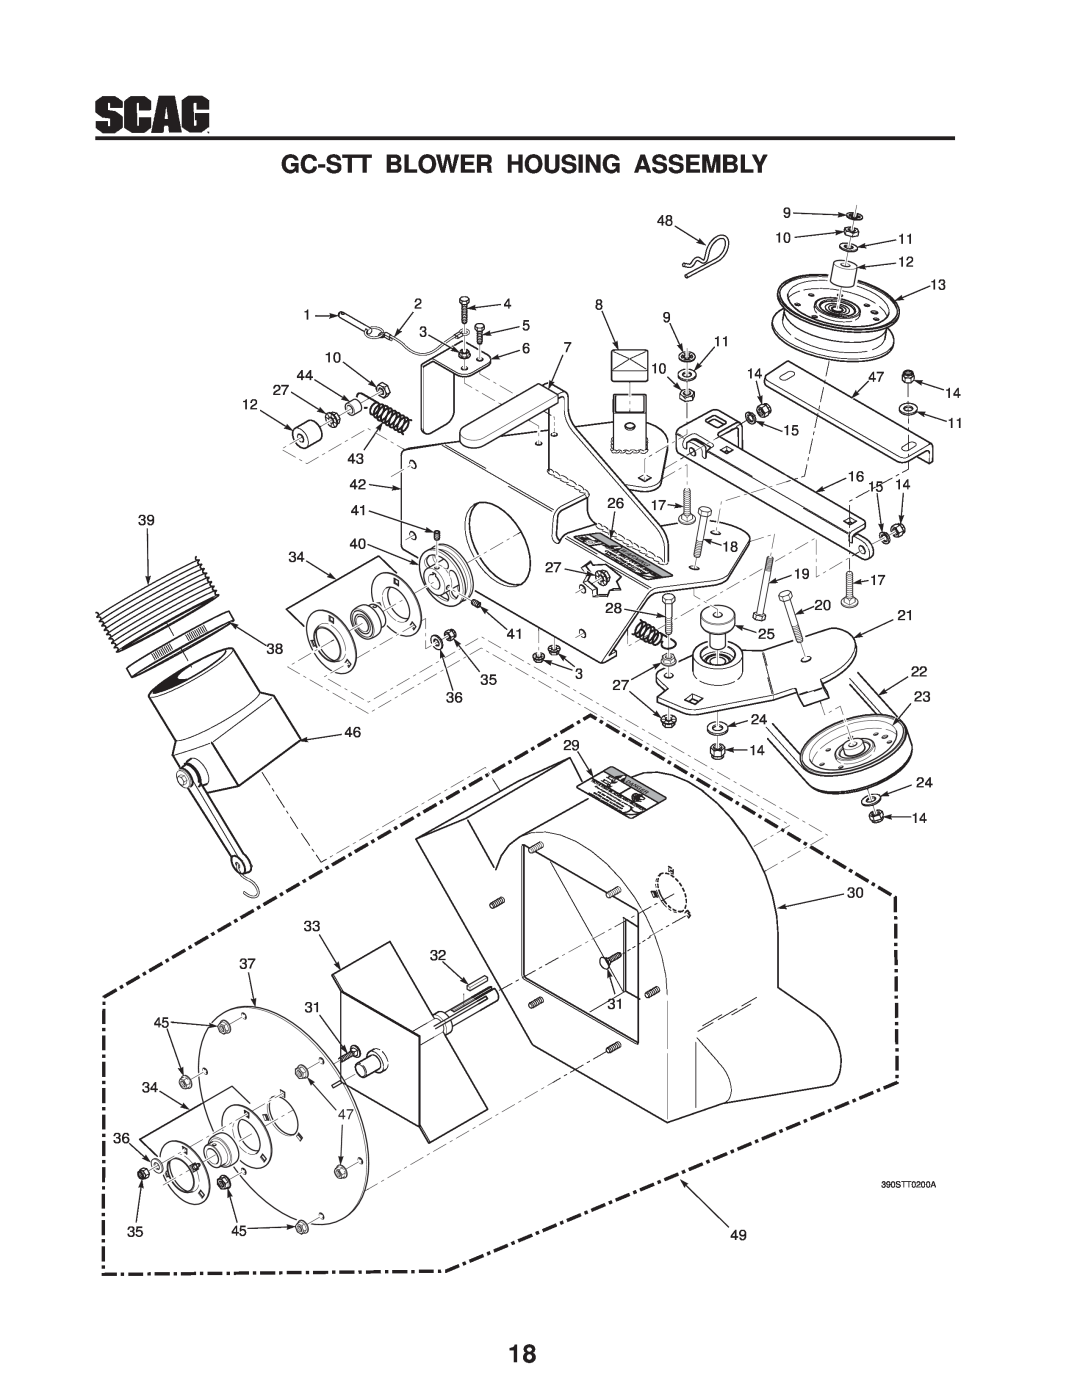 Scag Power Equipment GC-STT-CS manual Gc-Stt Blower Housing Assembly, 1511, Danger 